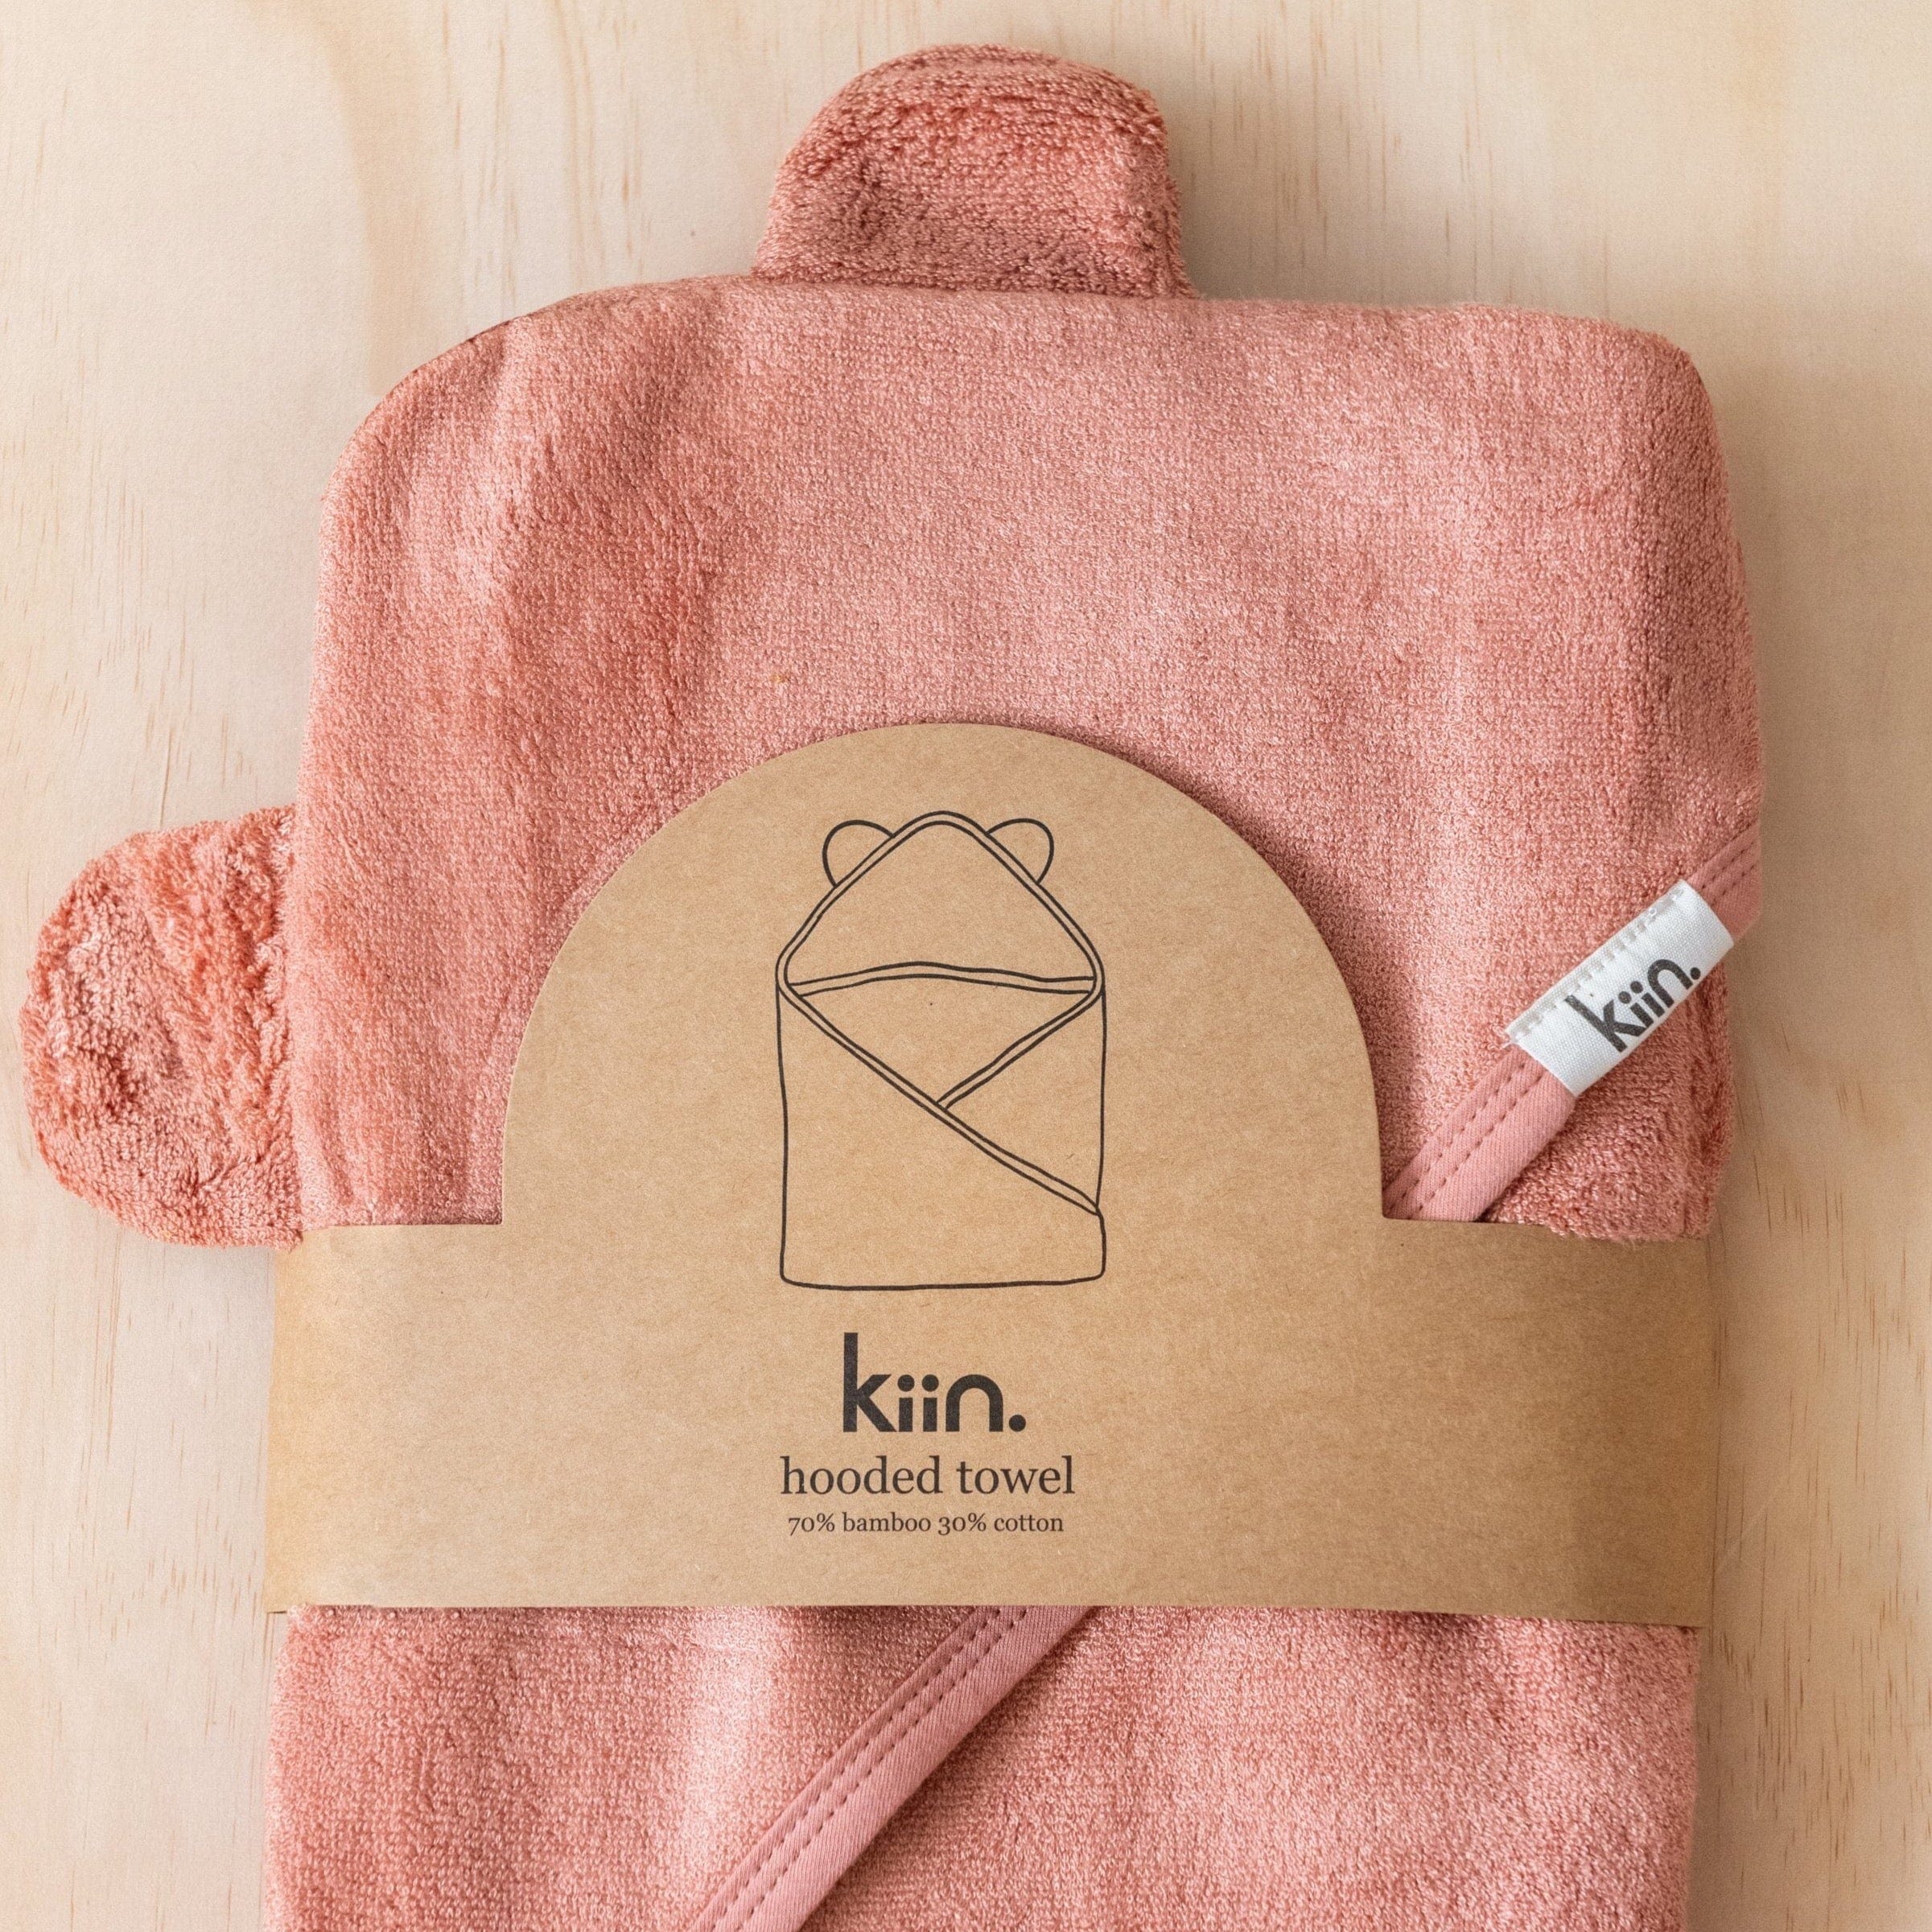 hooded towel Blush by Kiin